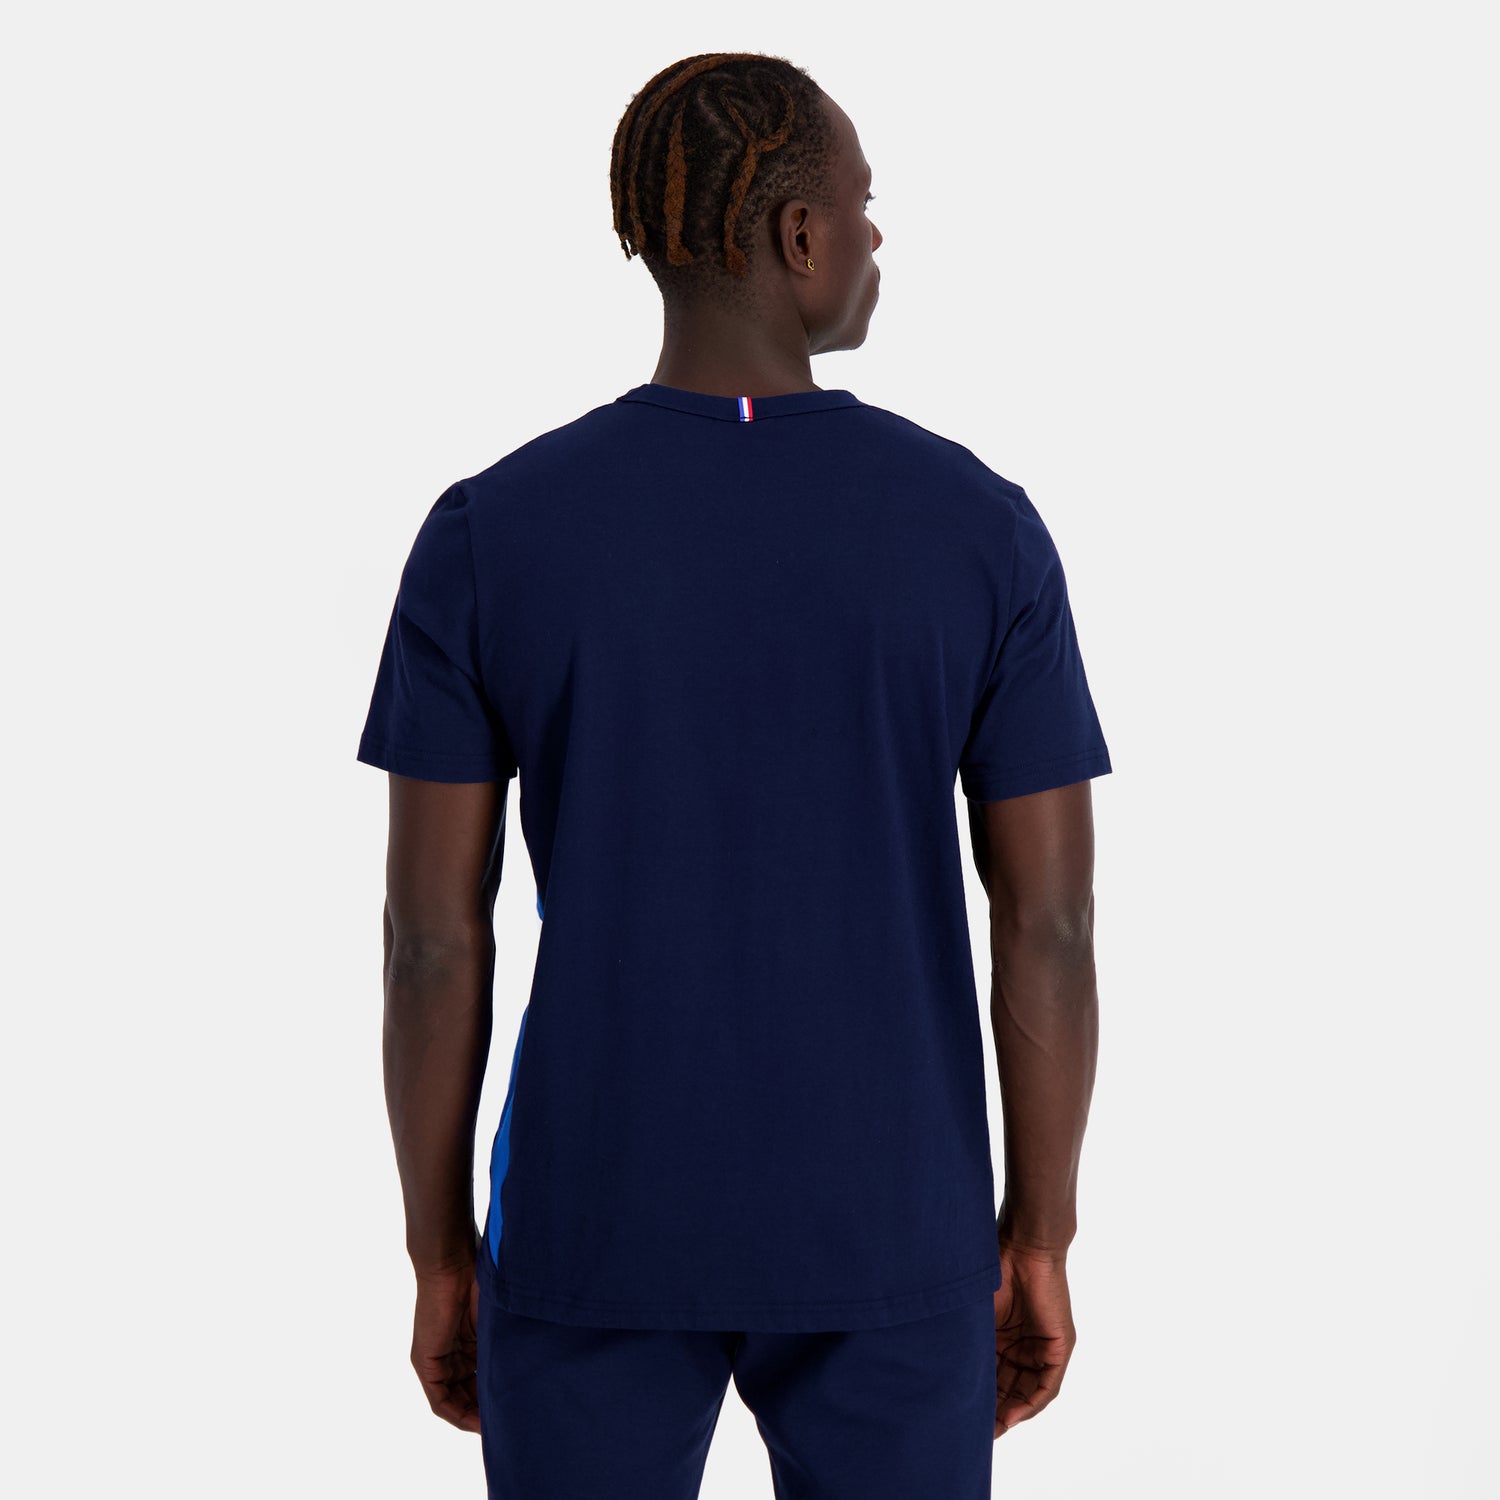 2410211-SAISON 1 Tee SS N°1 M bleu nuit | T-shirt Unisexe